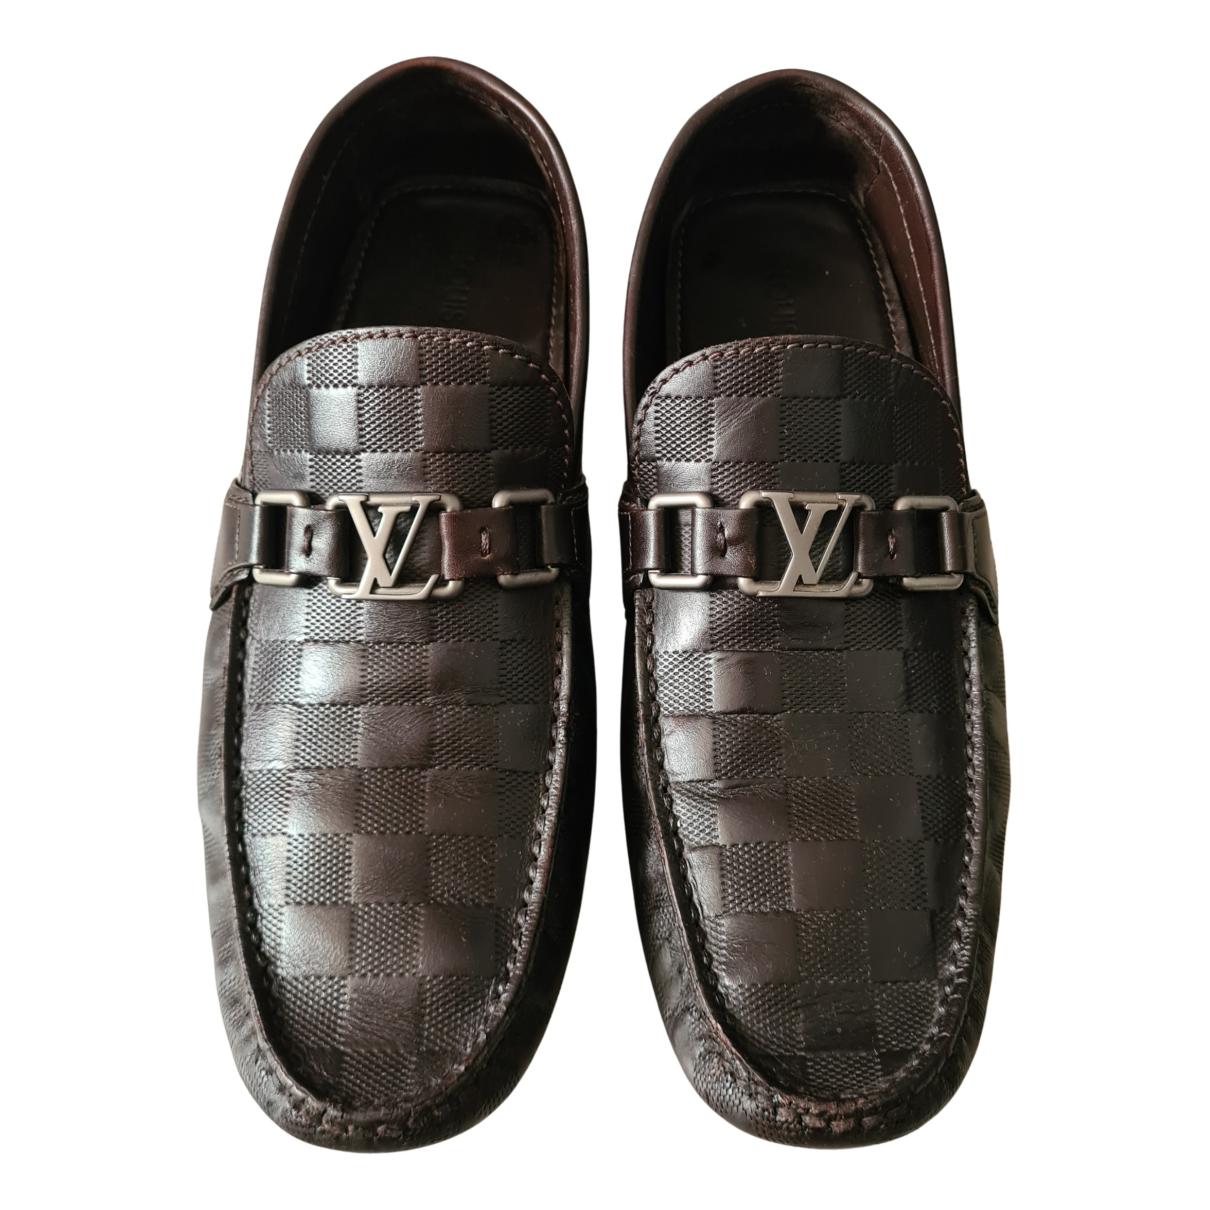 Hockenheim leather flats Louis Vuitton Brown size 8.5 UK in